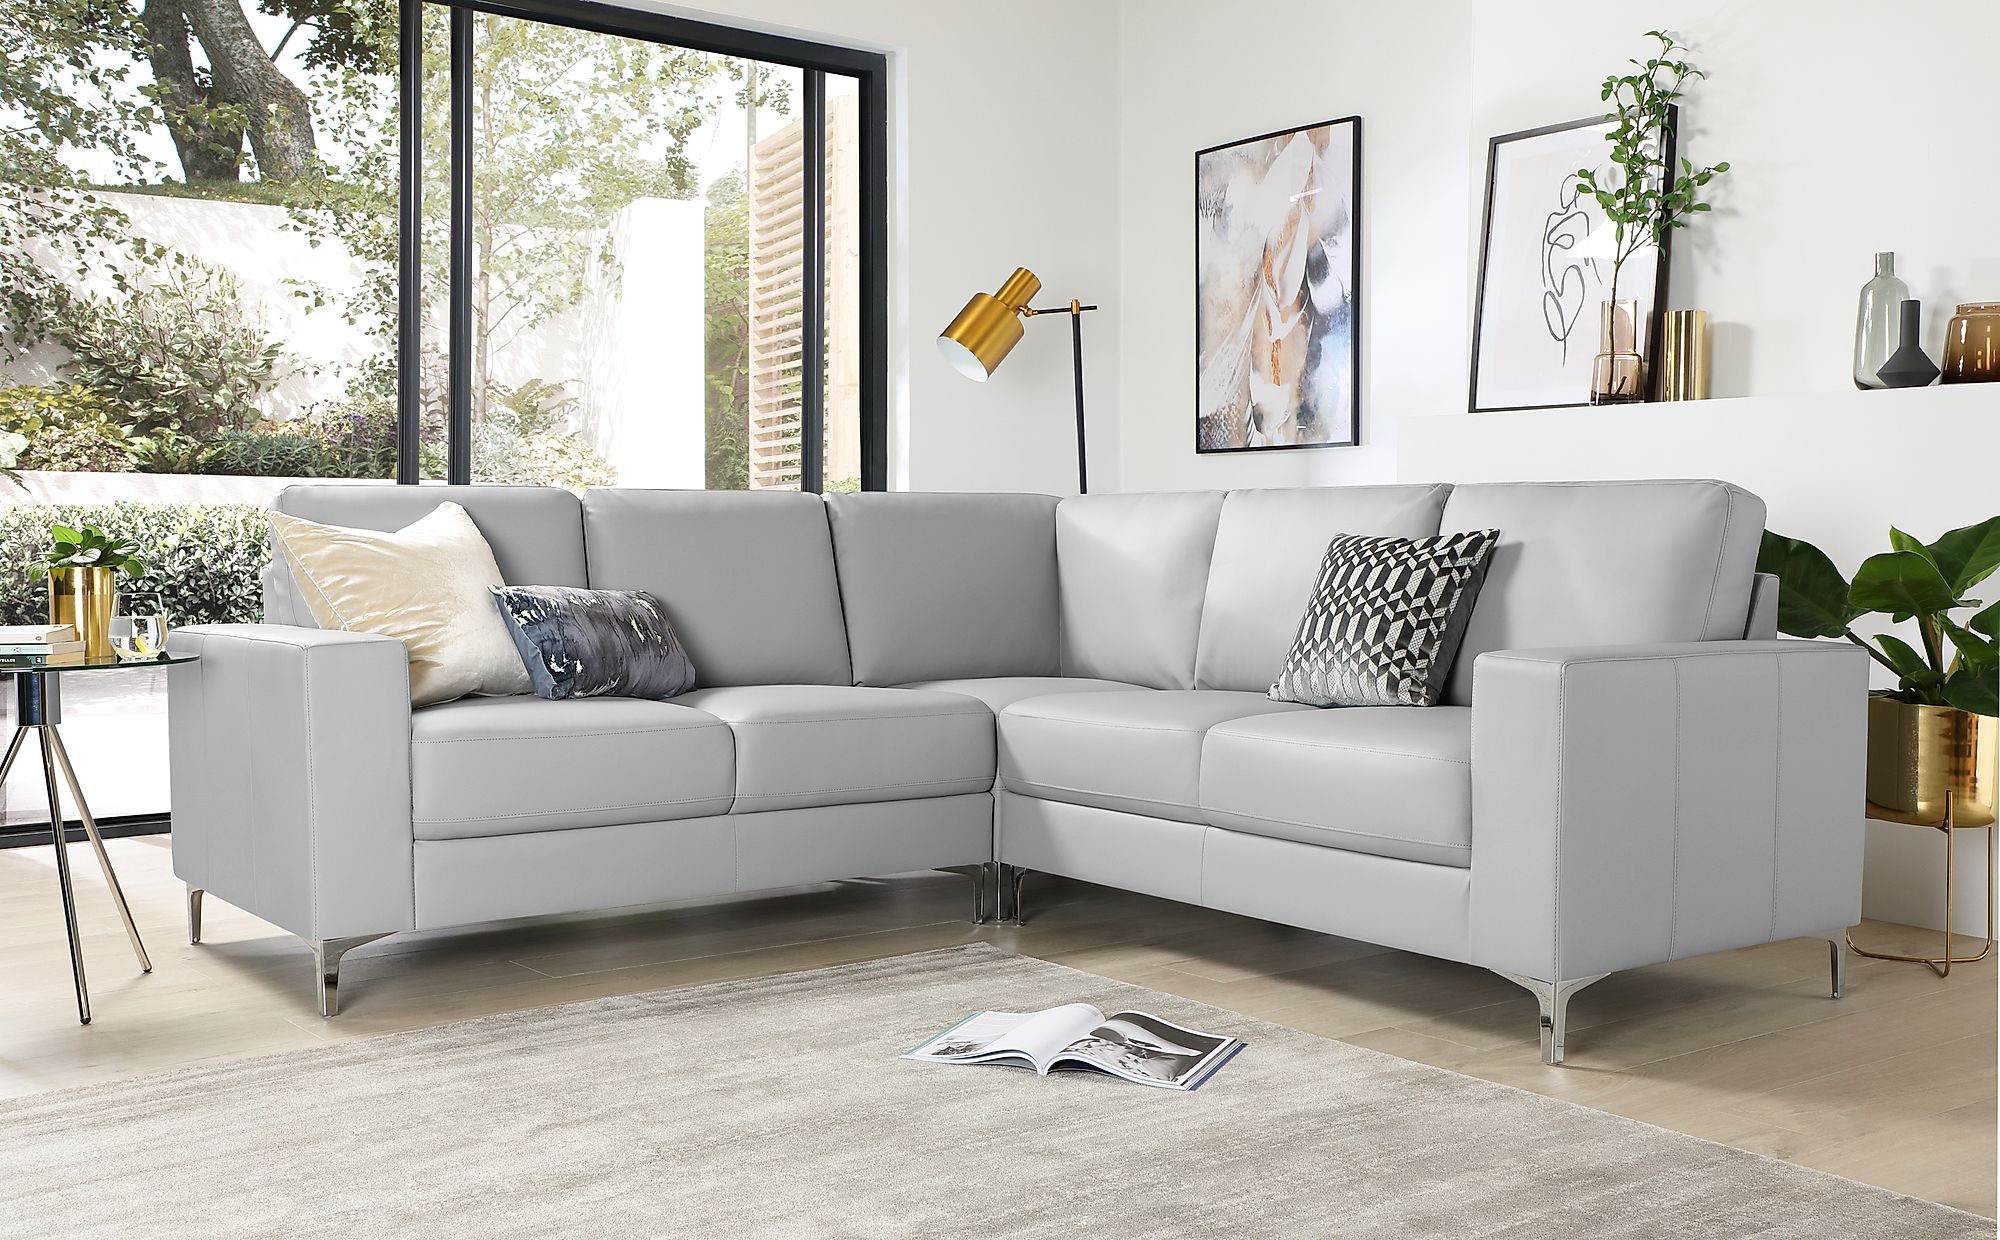 grey faux leather corner sofa